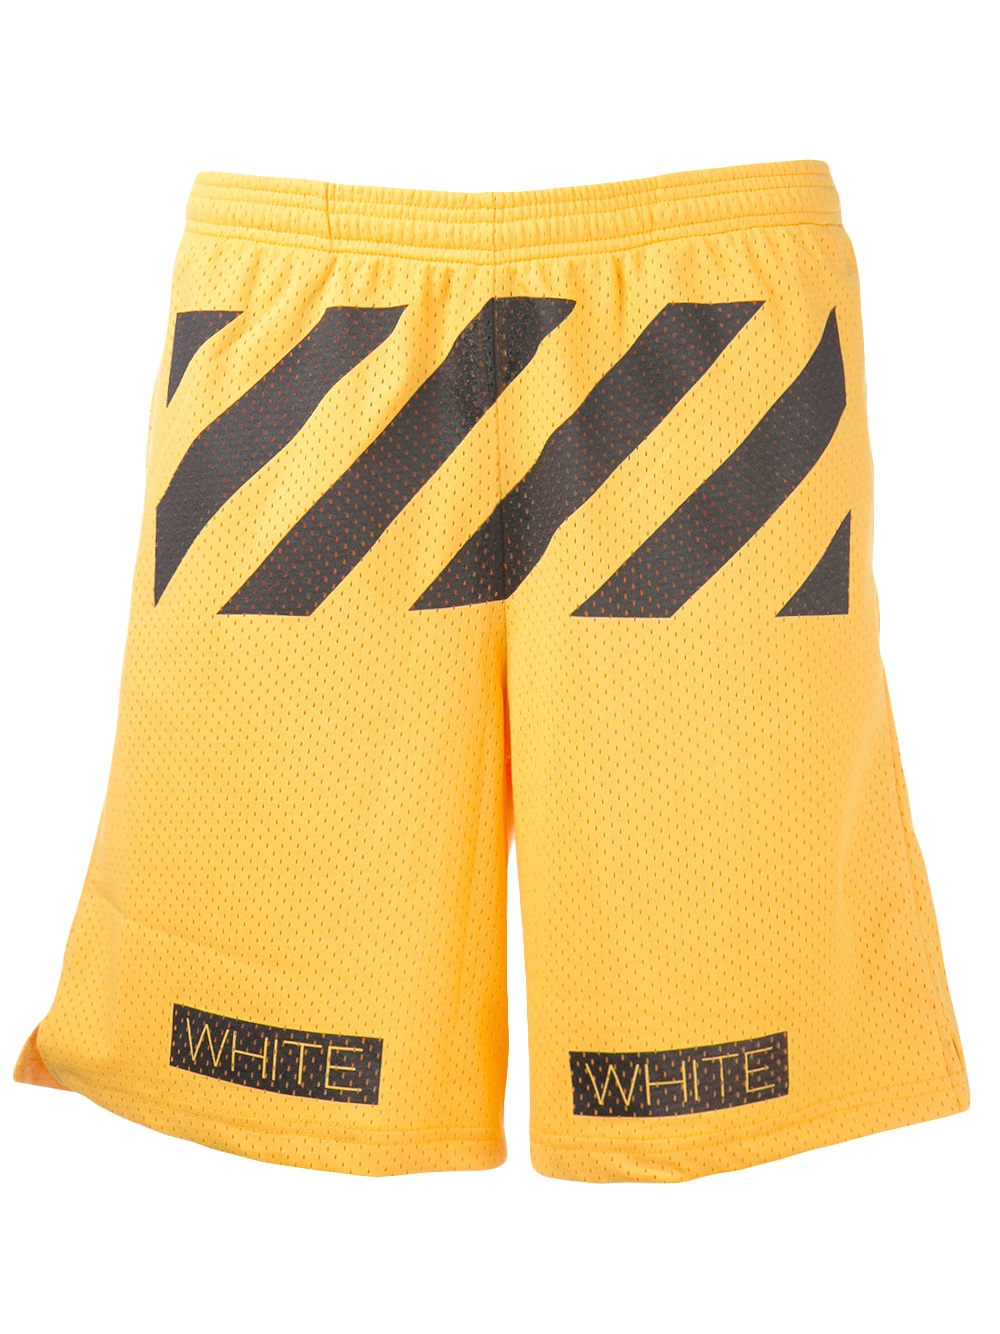 Off-White c/o Virgil Abloh Walk Shorts in Yellow & Orange (Yellow) for Men  - Lyst